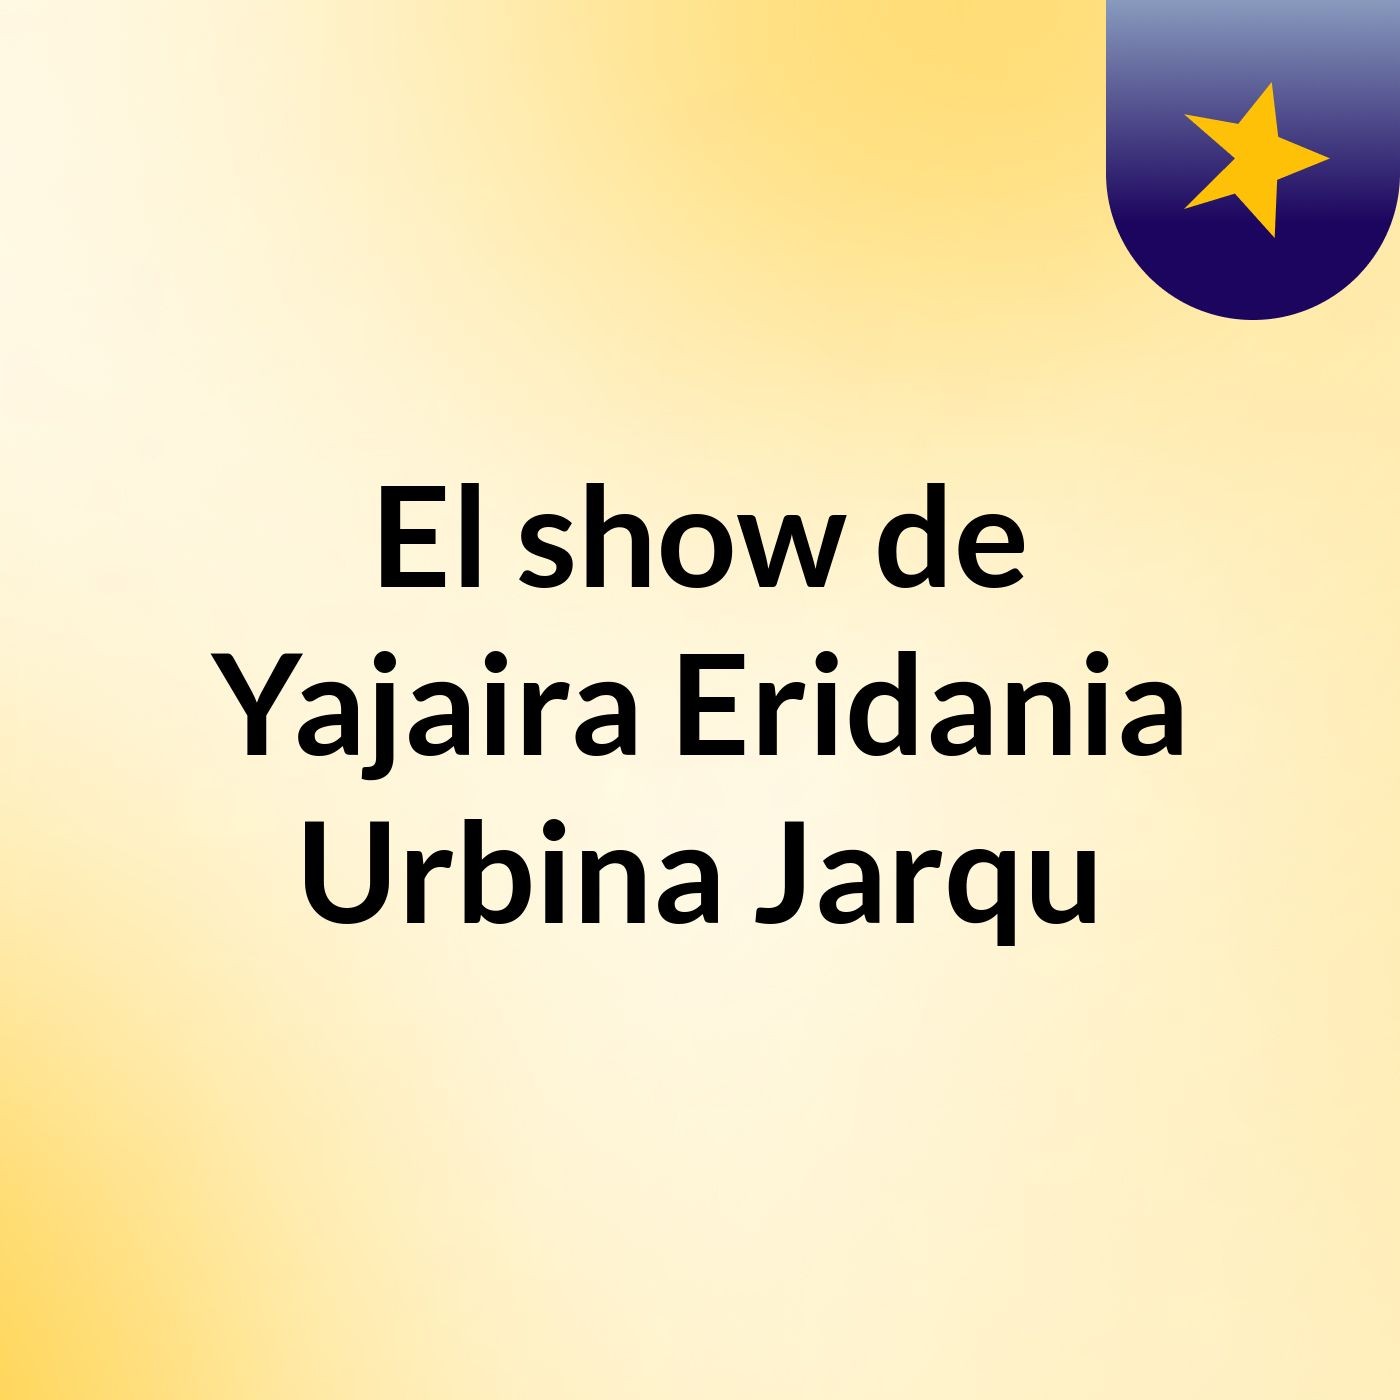 El show de Yajaira Eridania Urbina Jarqu